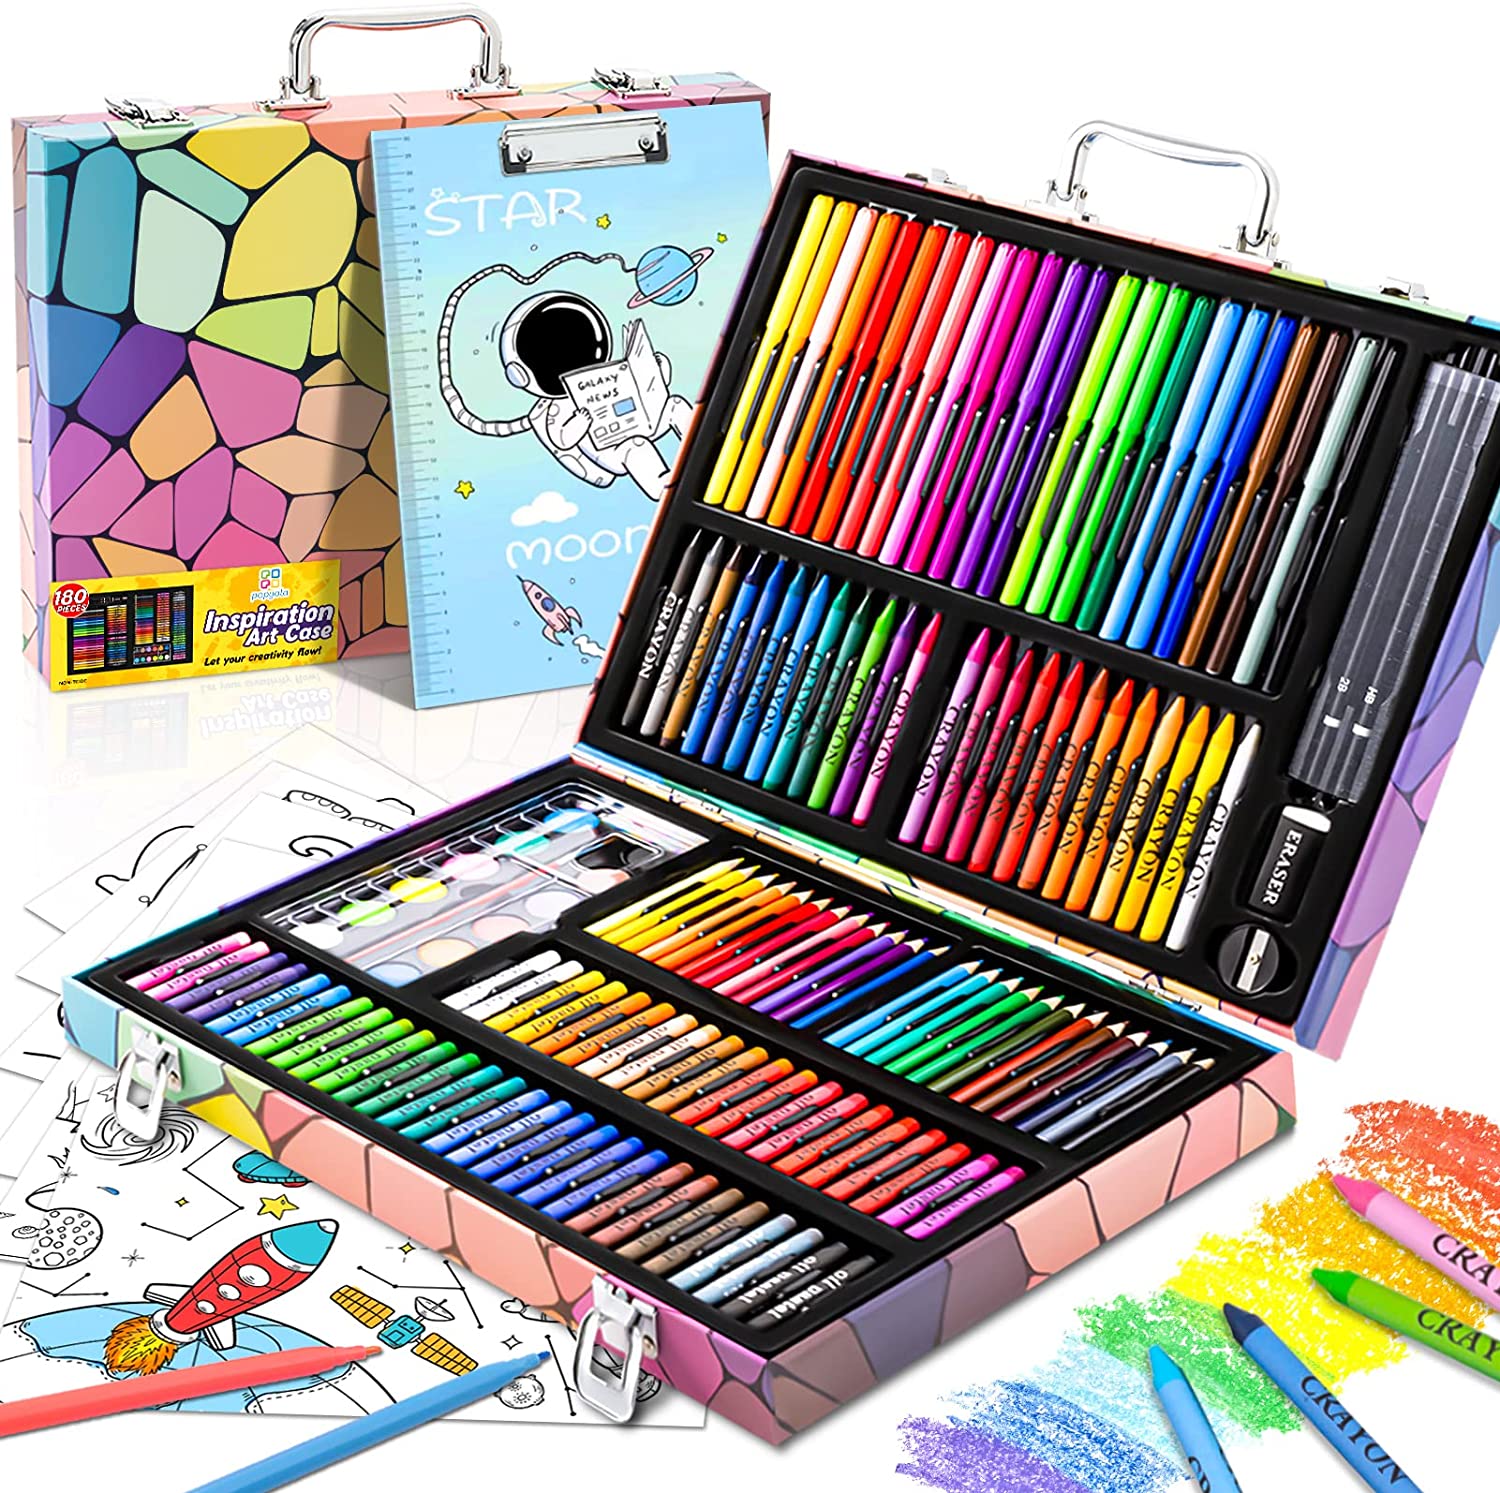  Florarich Art Supplies Set for Kids, 274 PCS Drawing